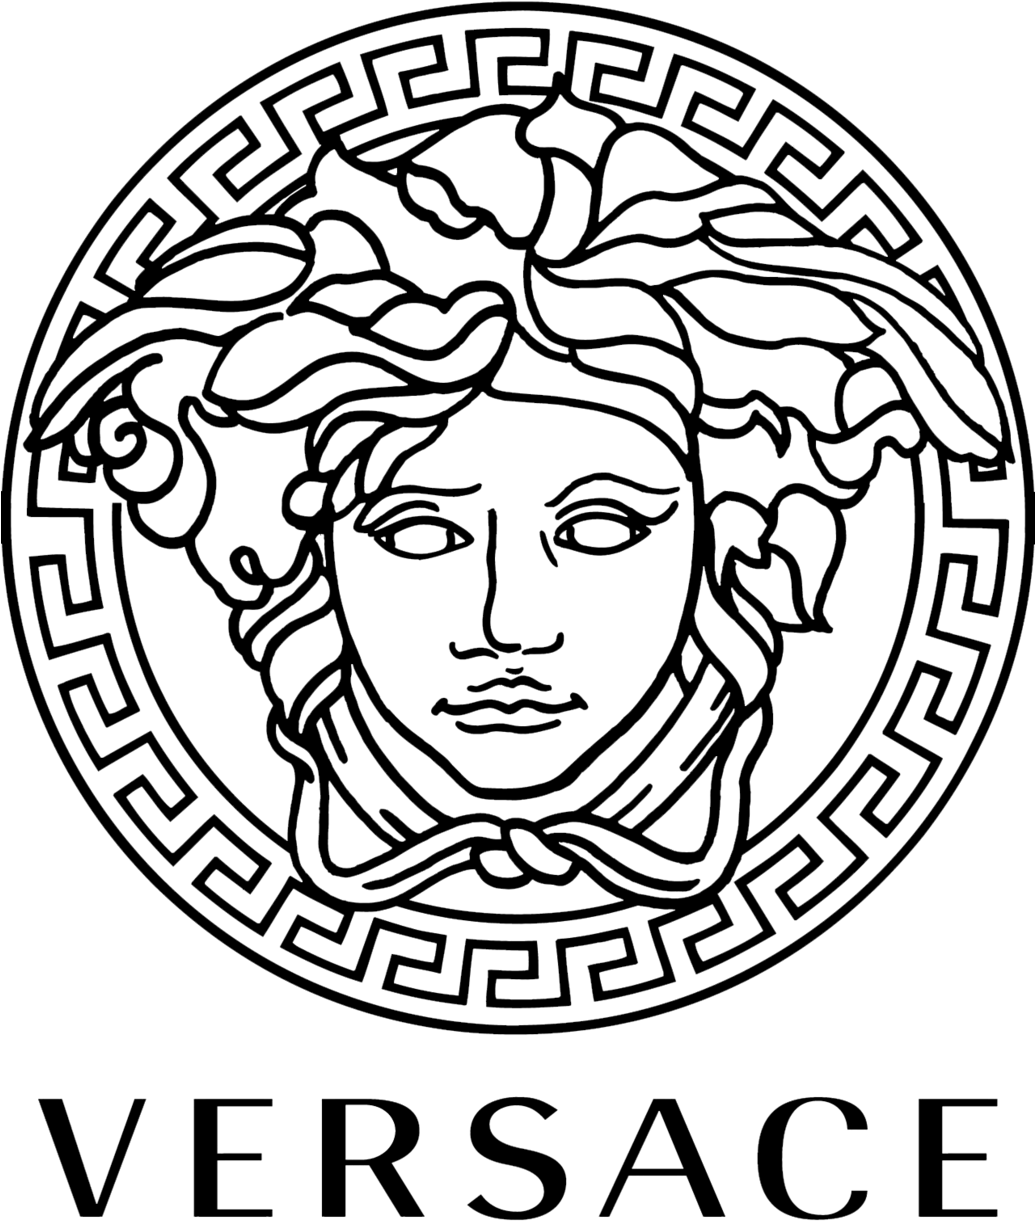 MK Michael Kors SVG Cricut Silhouette Cameo file  Vectorency